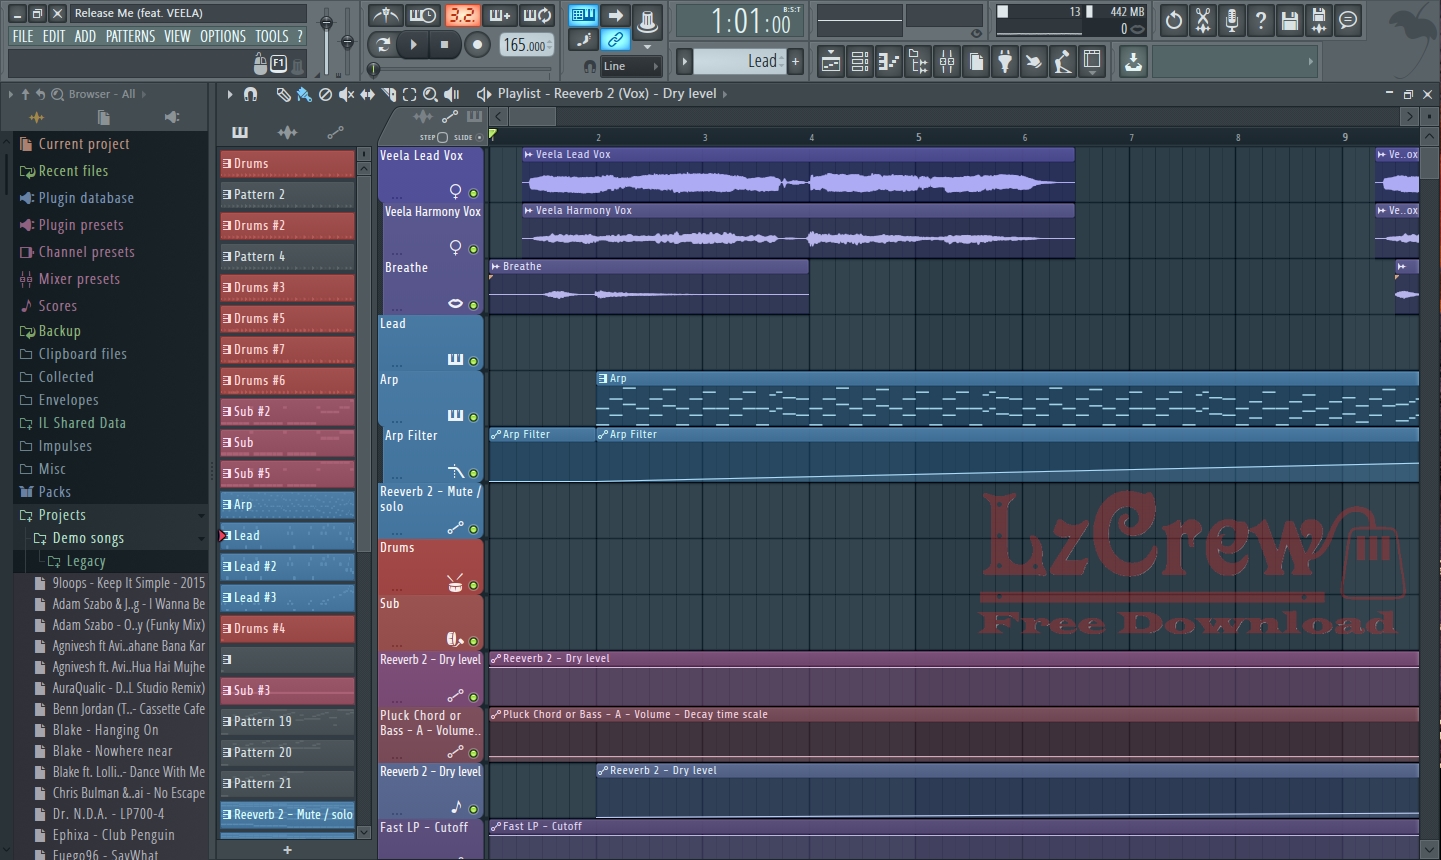 FL Studio 12.5.1.165 - Neowin